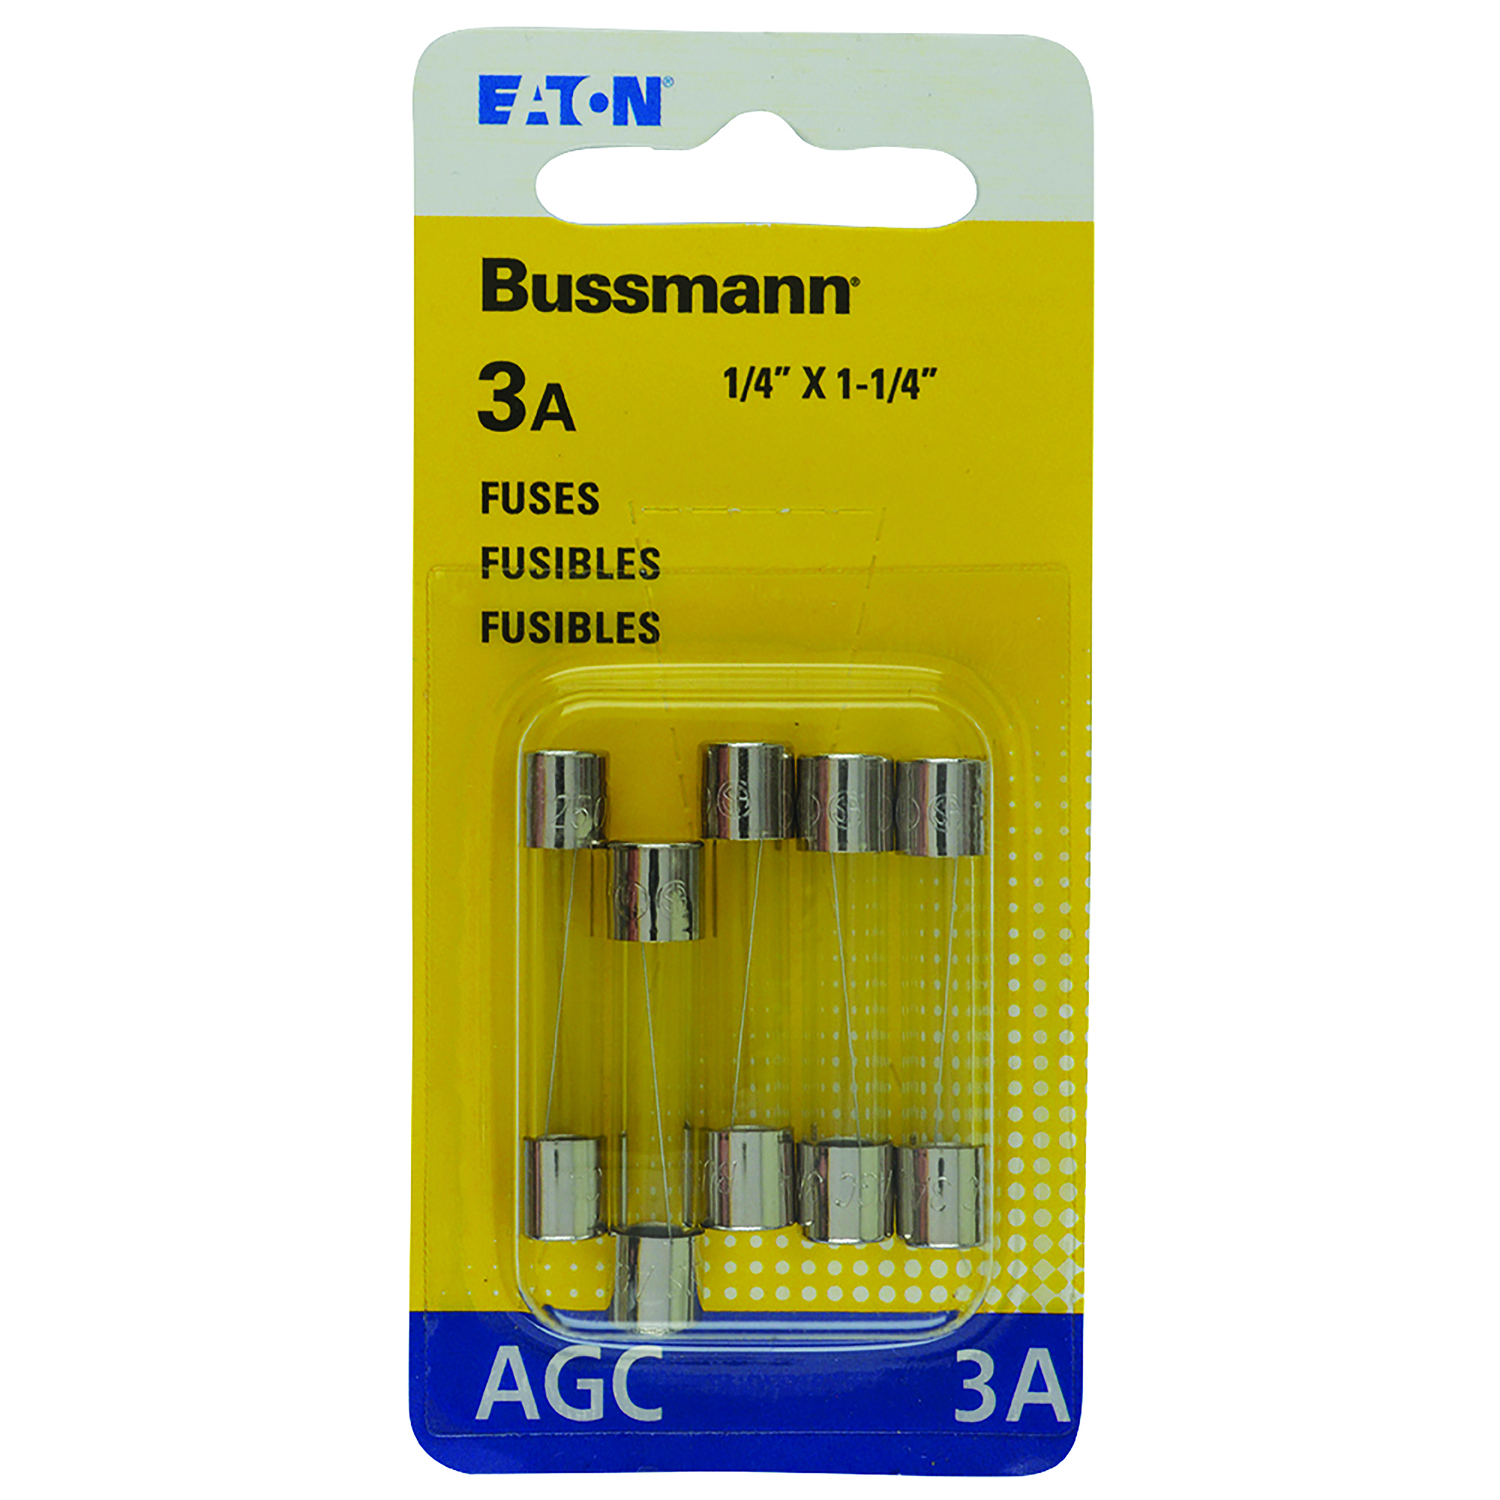 Bussmann 3 amps AGC Clear Blade Fuse 5 pk